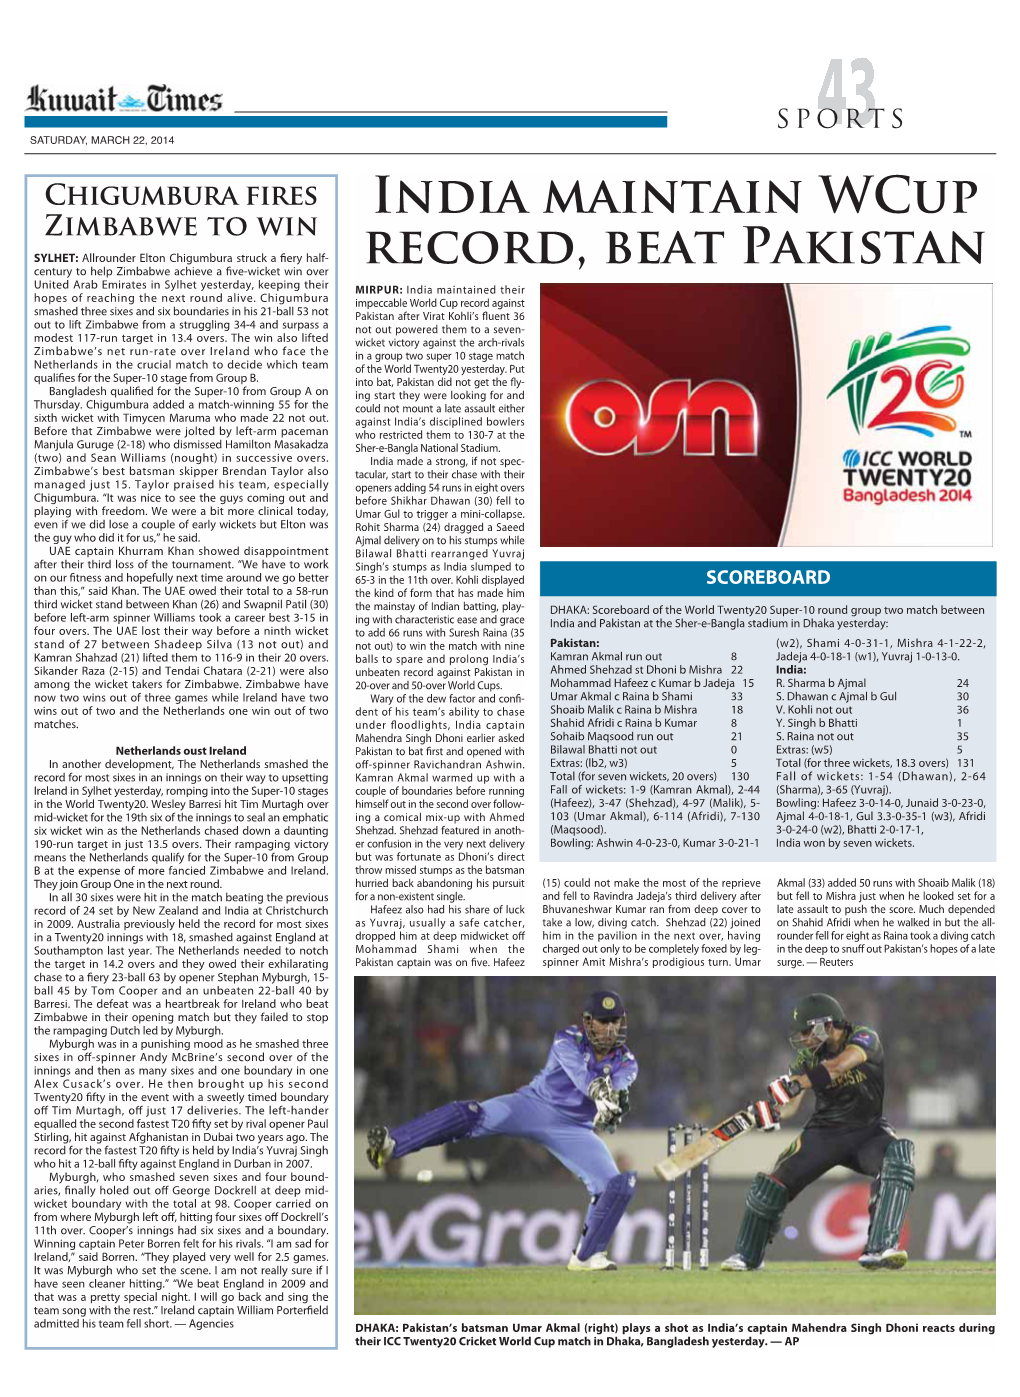 India Maintain Wcup Record, Beat Pakistan